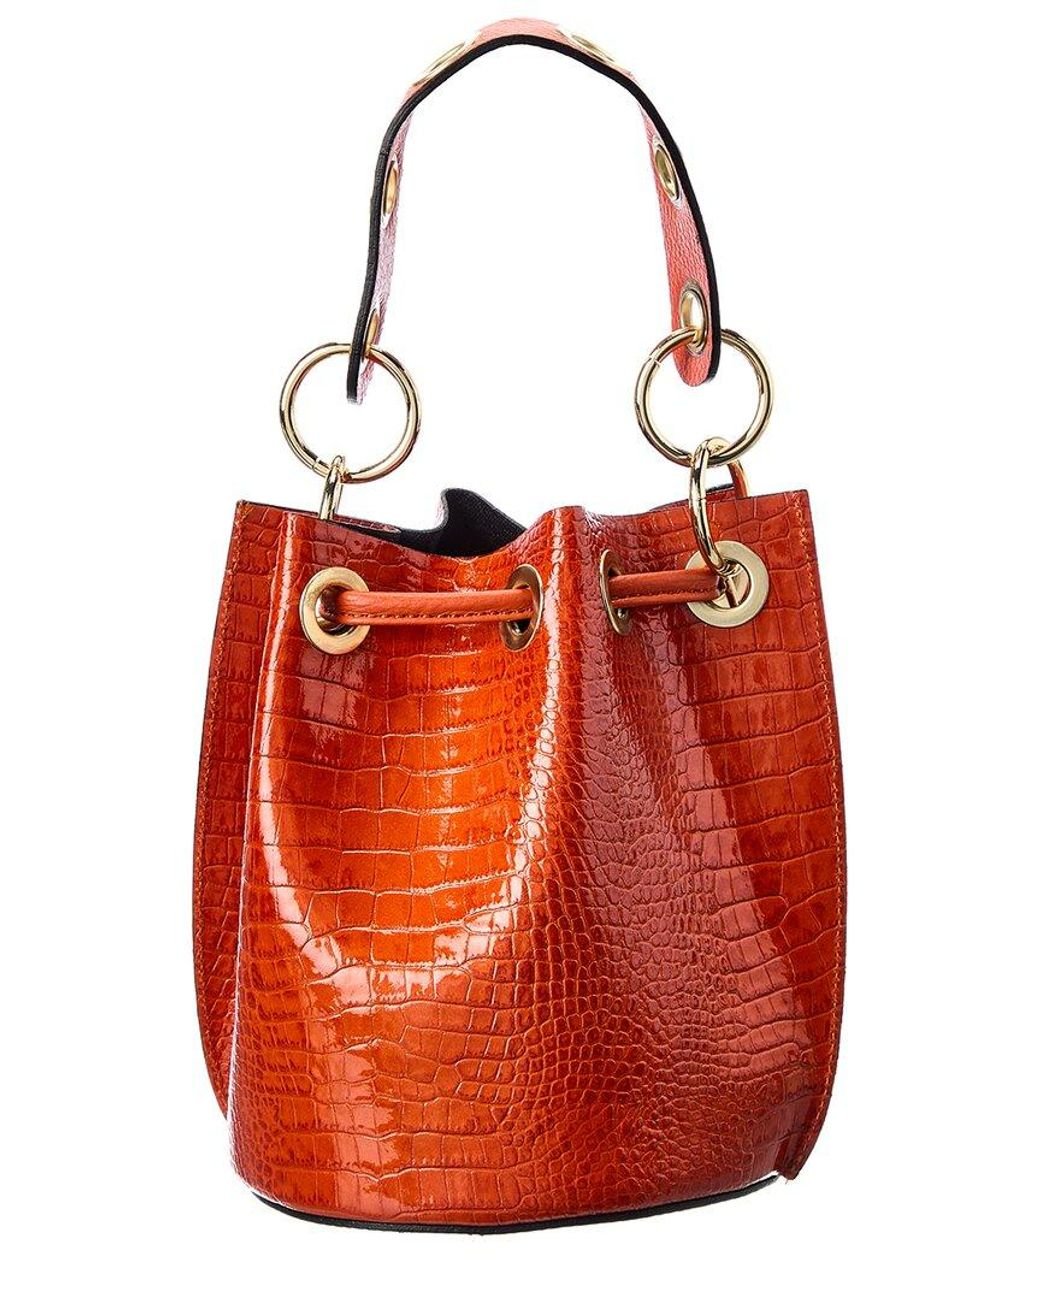 The Italian Croc | Chic Clutch Leather Handbag